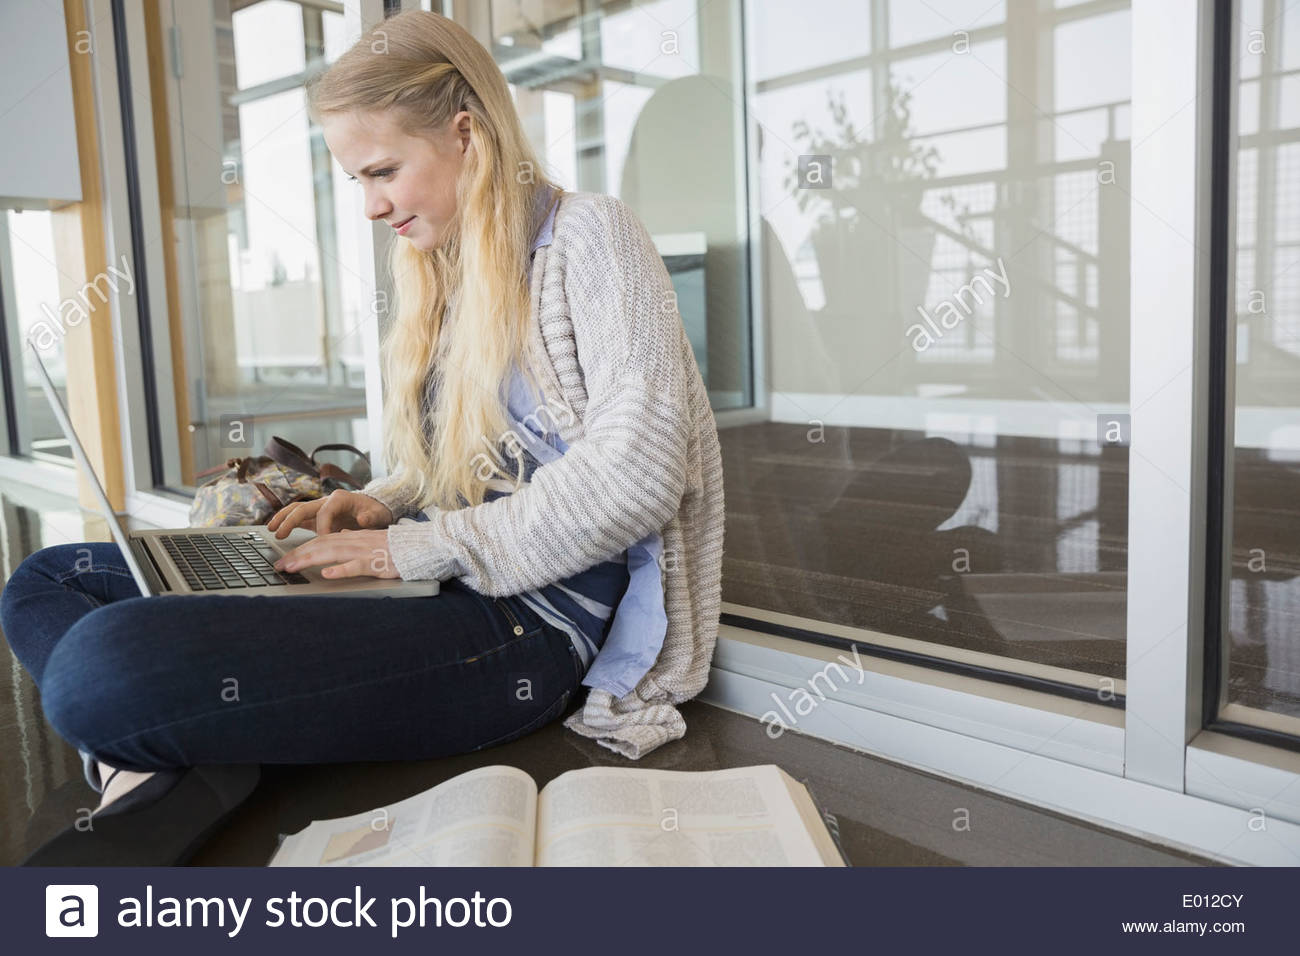 High school student using laptop on floor Stock Photo